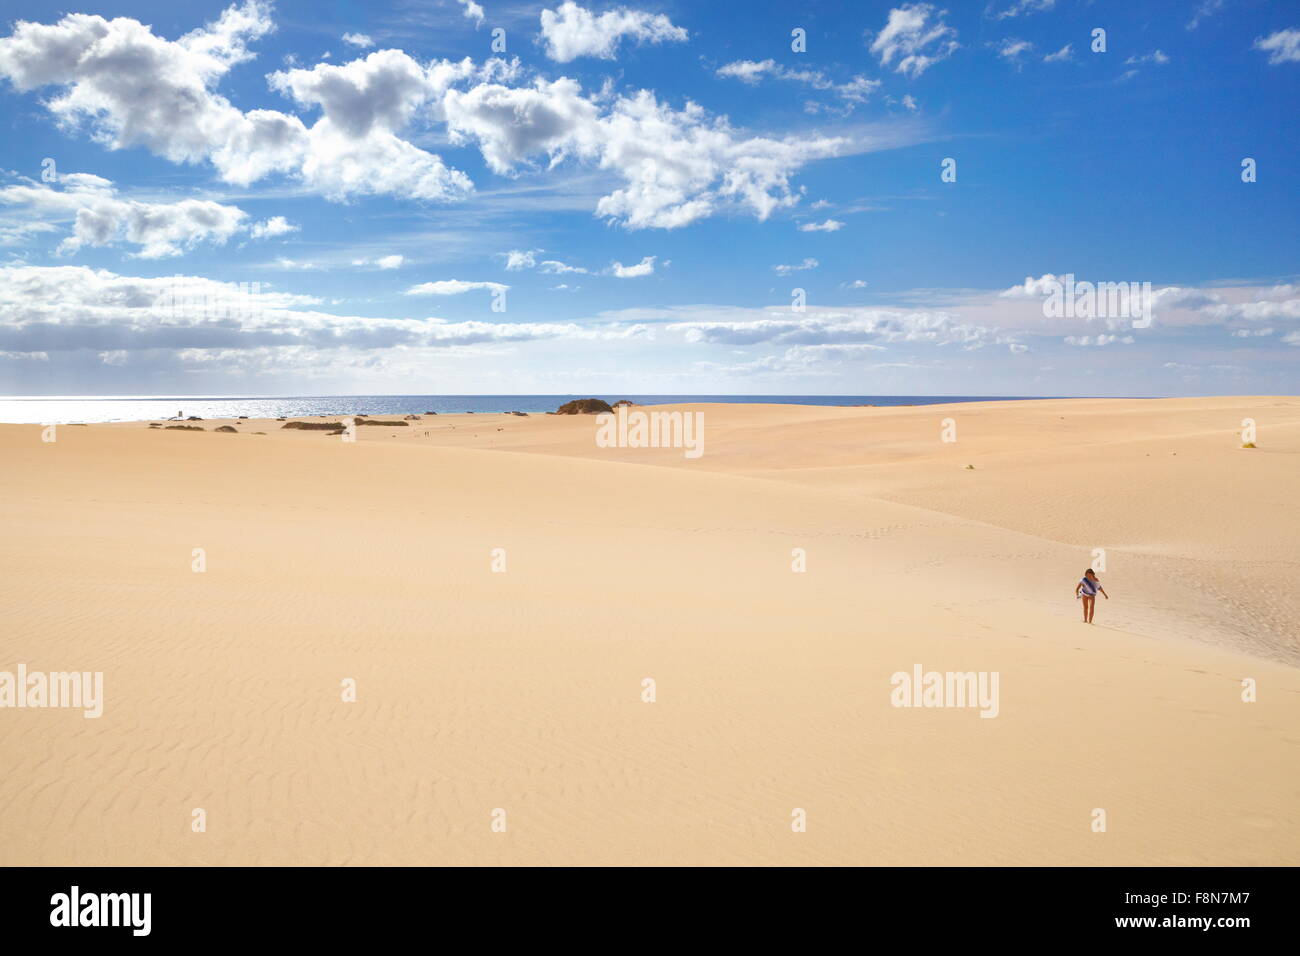 Landscape of sand dunes in Parque Natural de Corralejo, Canary Islands, Fuerteventura Island, Spain Stock Photo